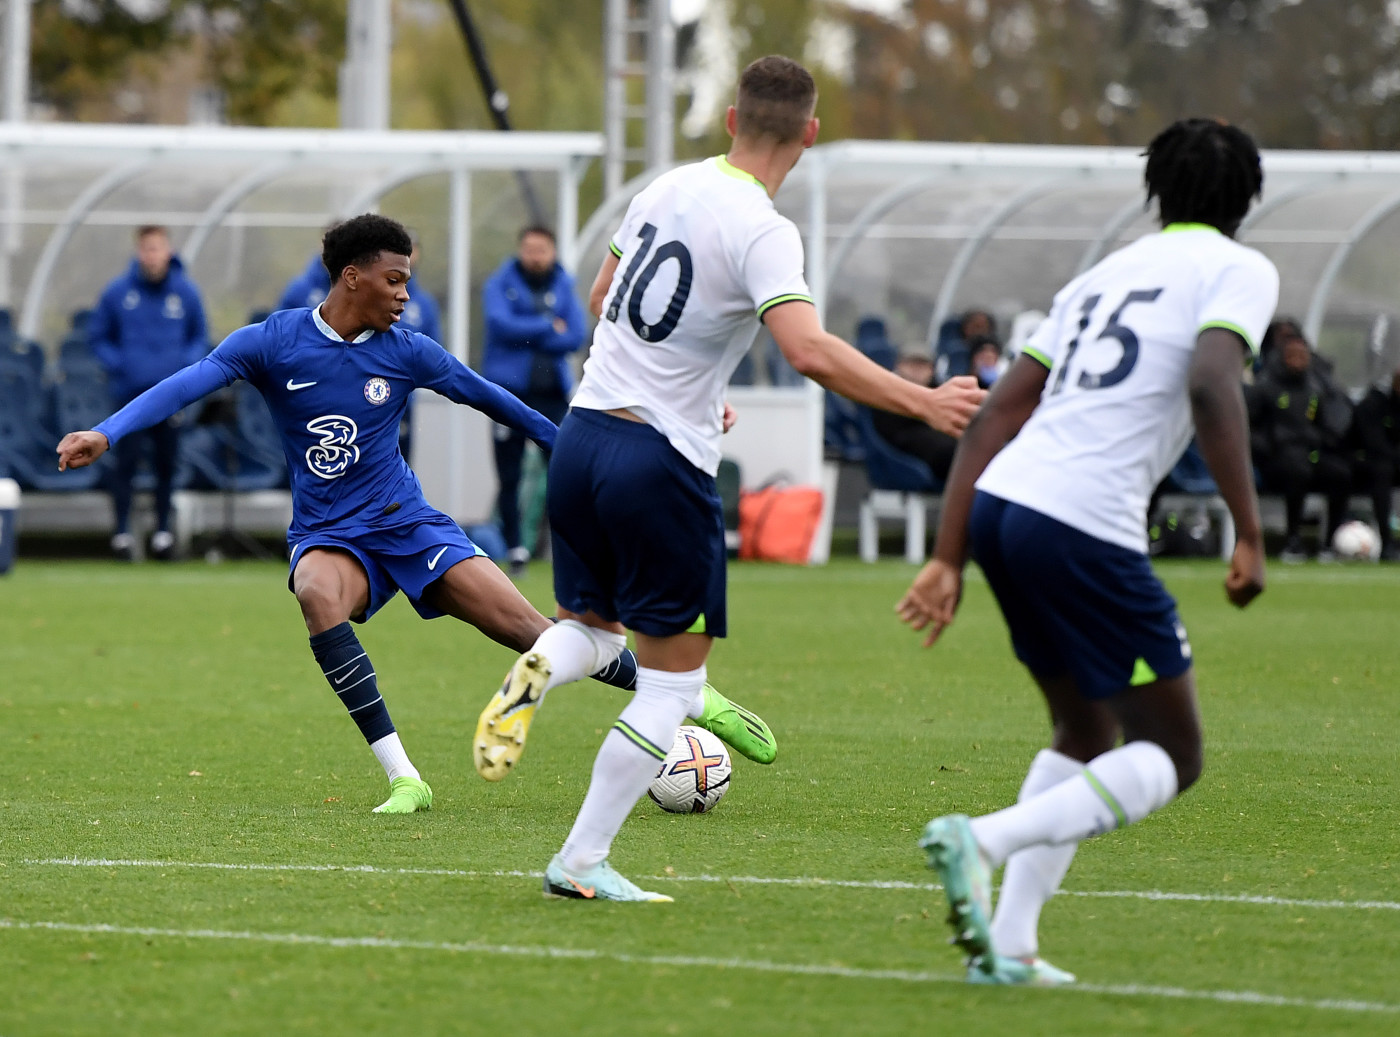 Under 18s report: Tottenham Hotspur 1 Chelsea 2, News, Official Site